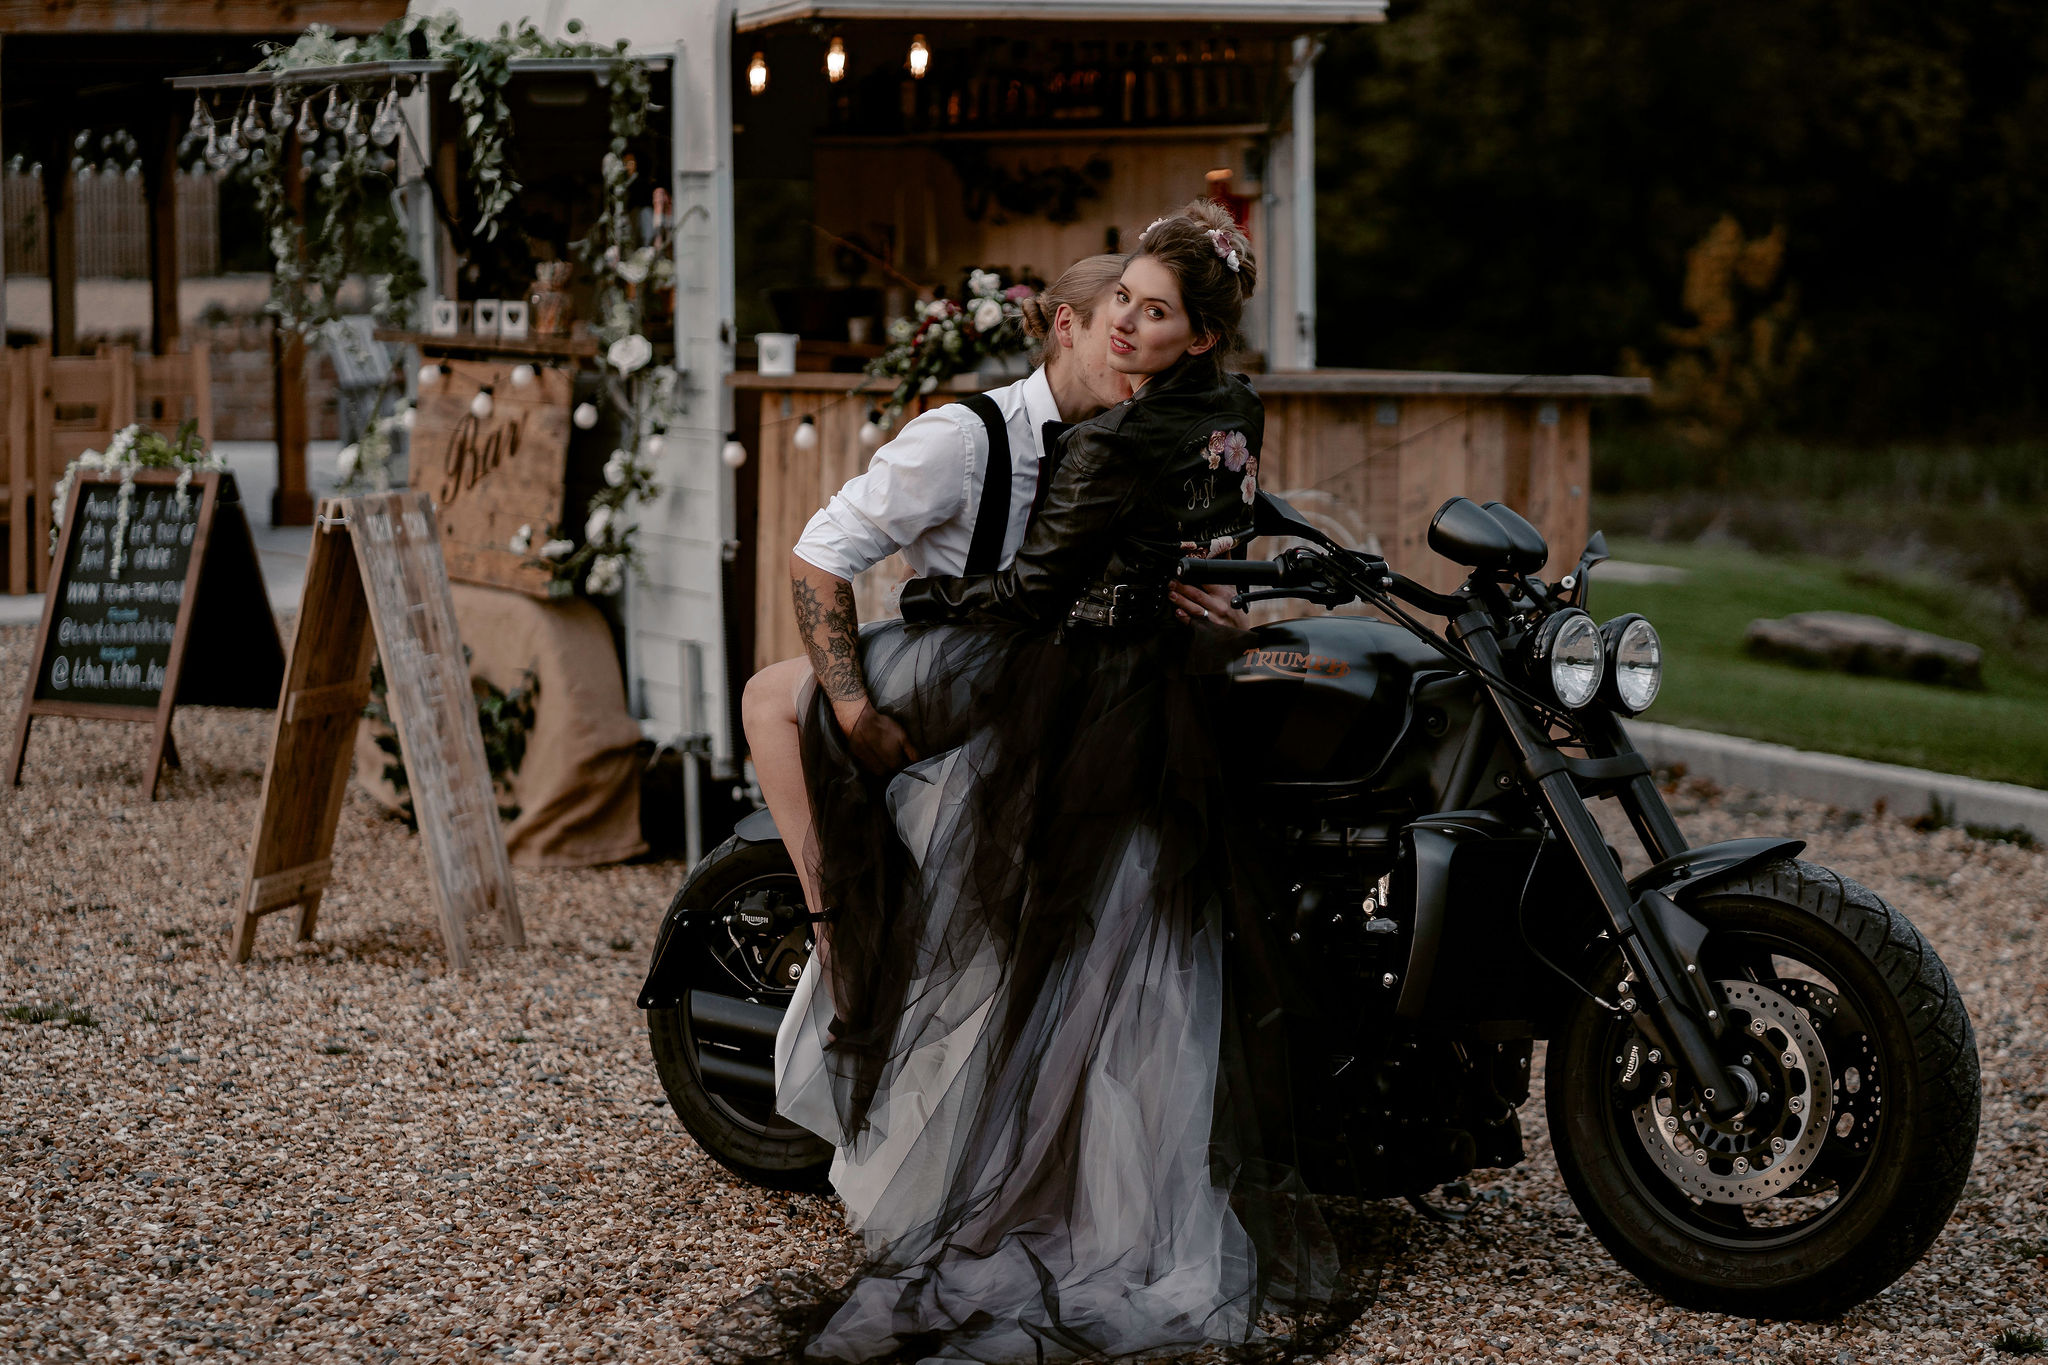 Ryley and Flynn - alternative wedding dress - black and white wedding dress on motorbike - awesome black wedding gown